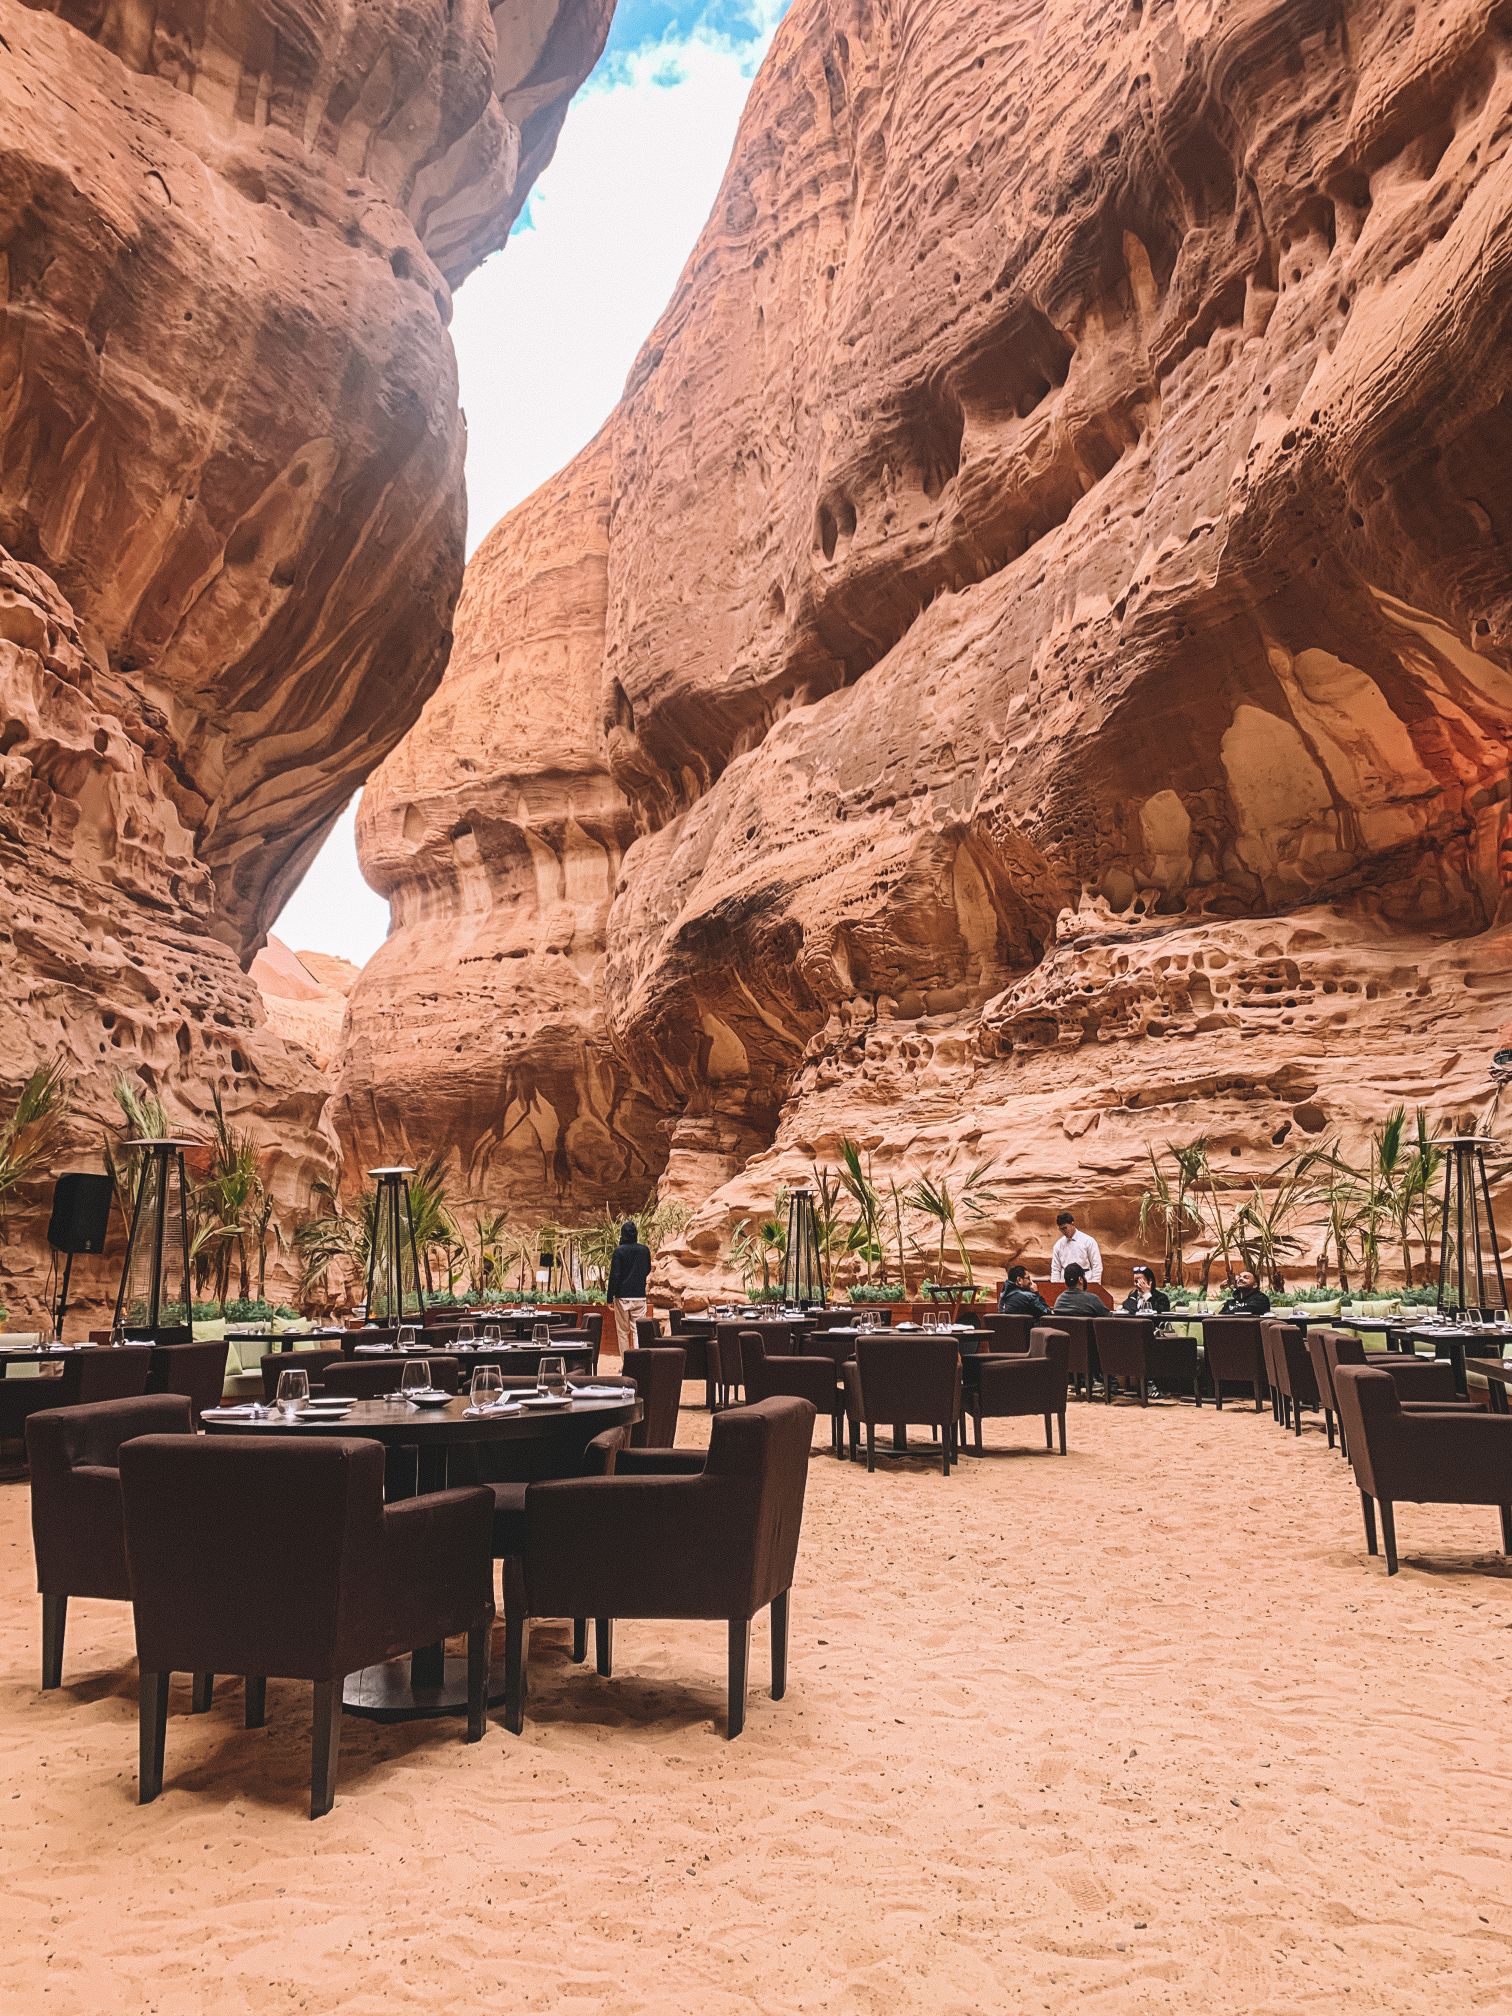 Restaurant in the mountains in Al-Ula Saudi Arabia 